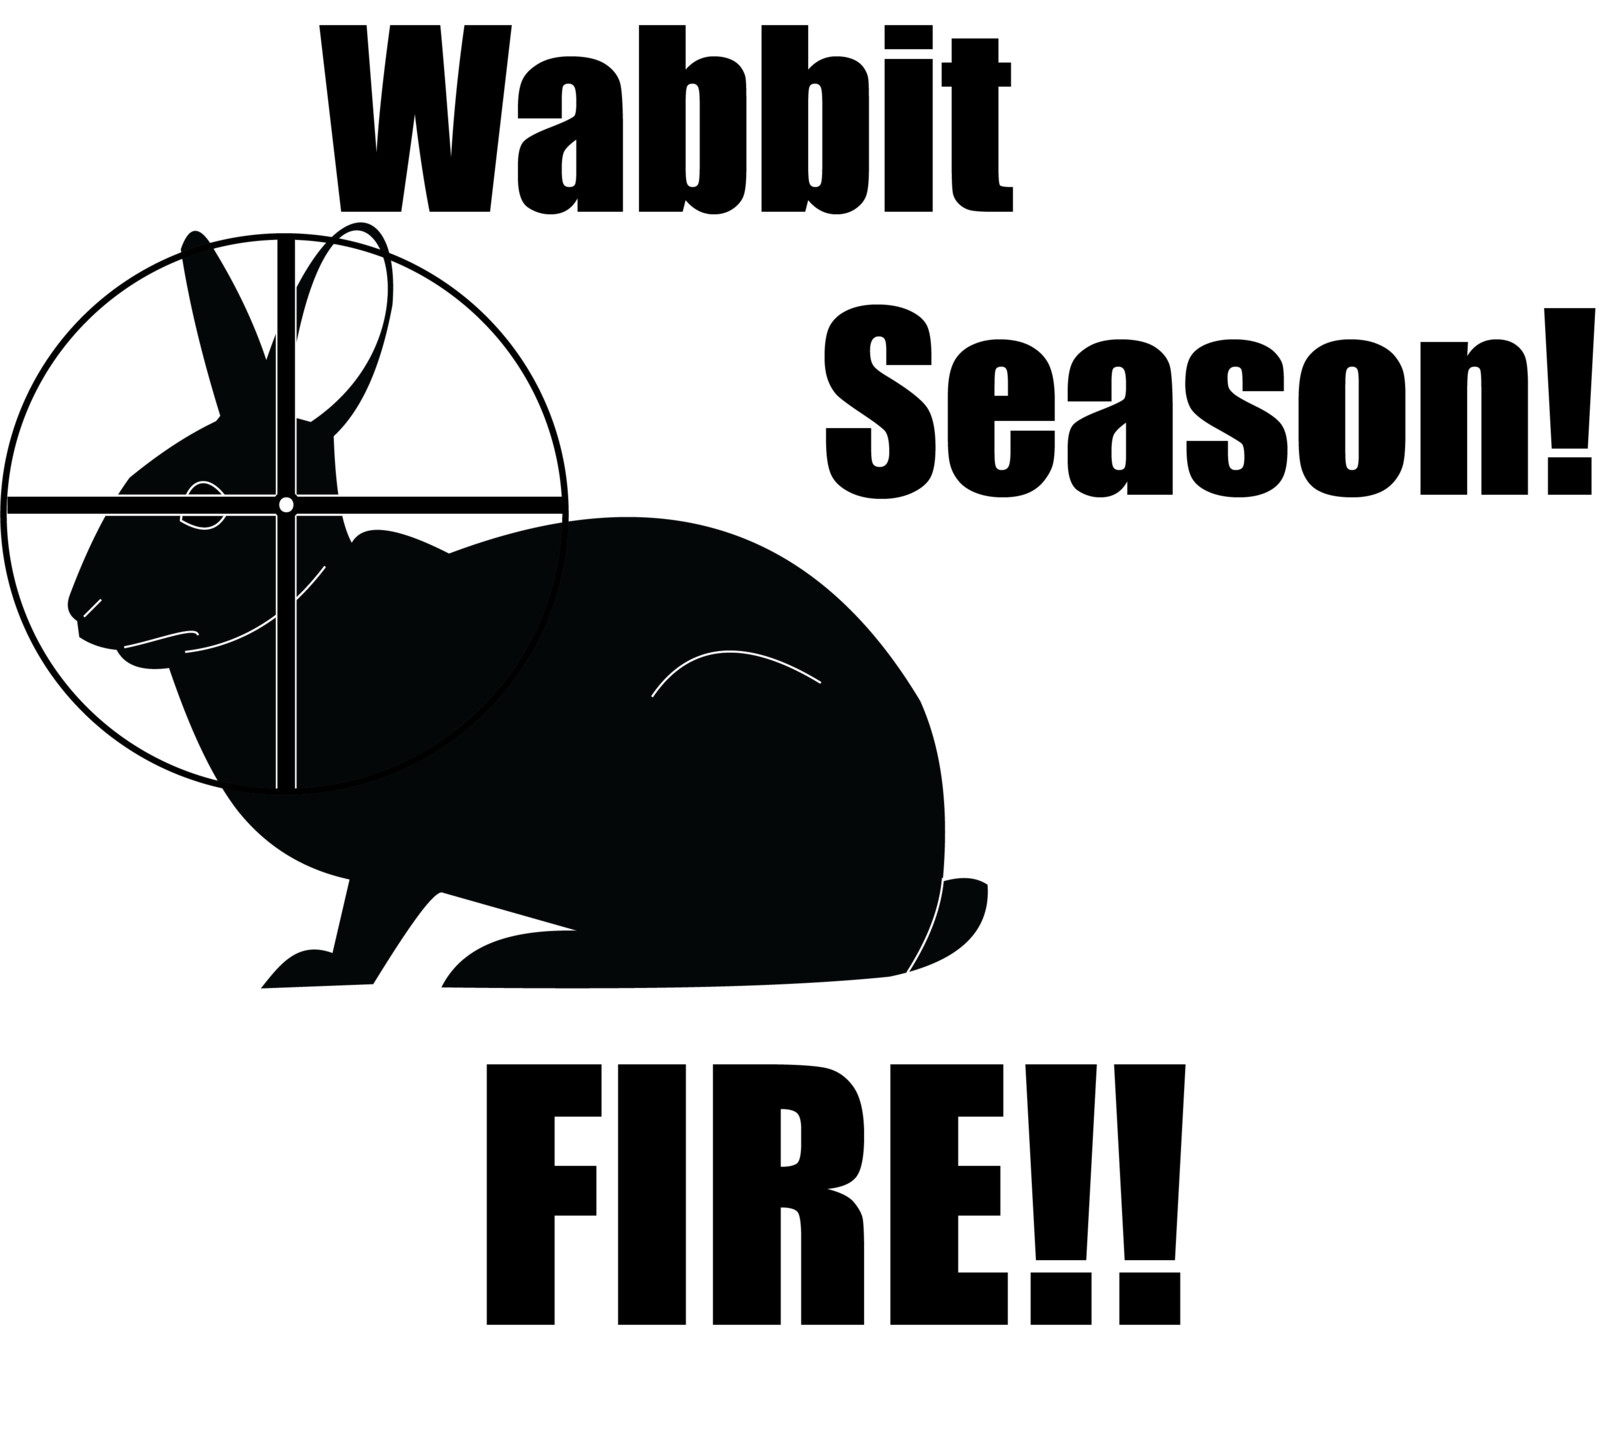 Wabbit Season shirt design